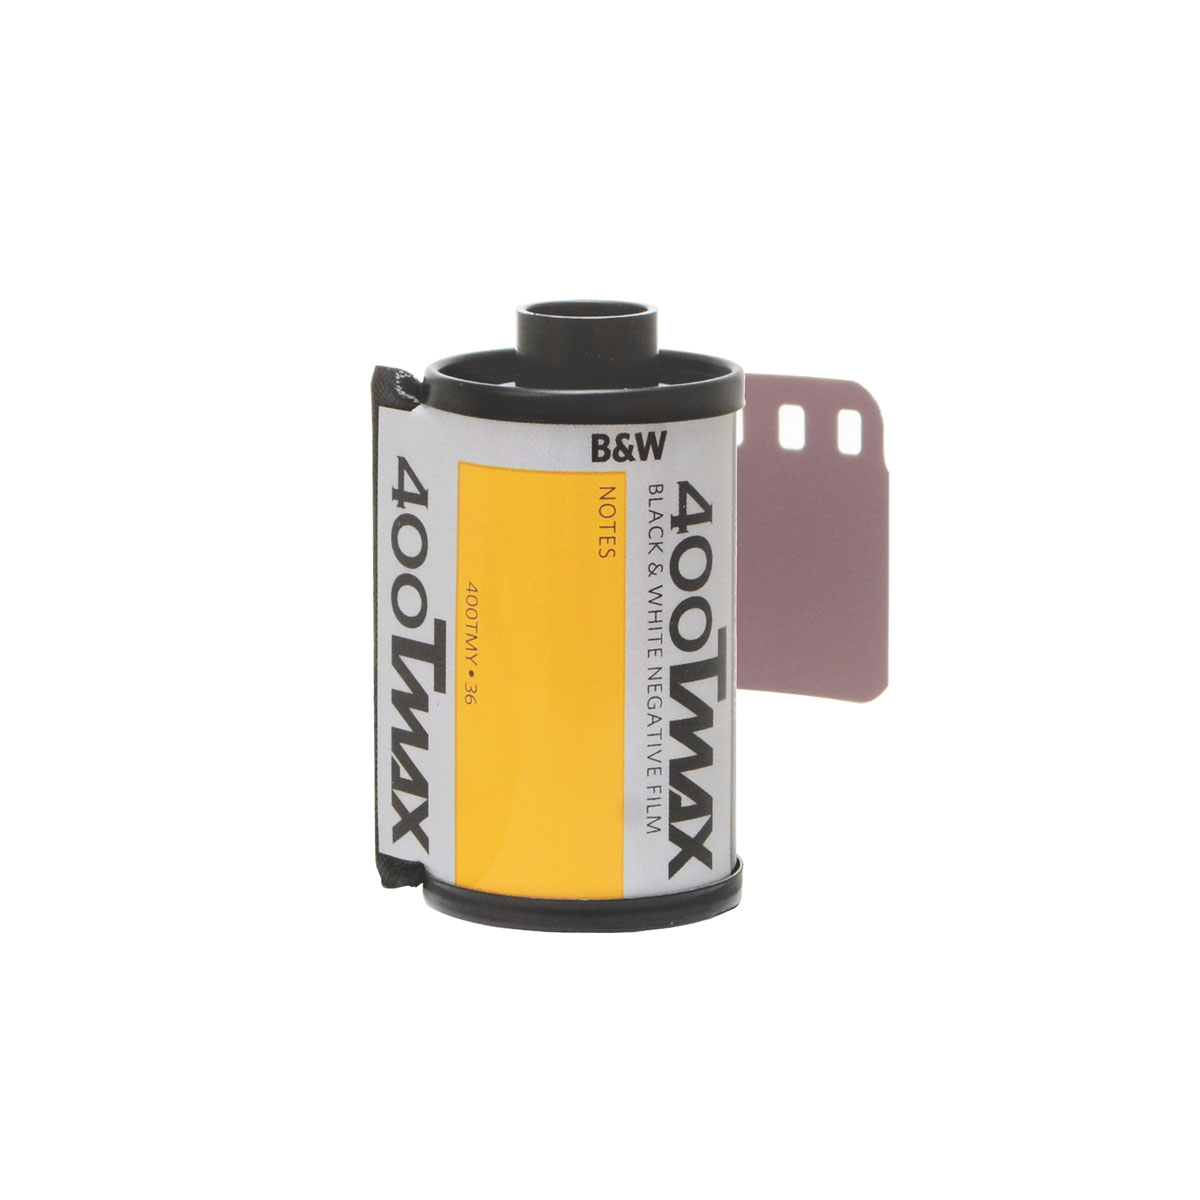 Kodak Professional T-Max 400 Black & White Negative Film (35mm Film, 36 Exp)